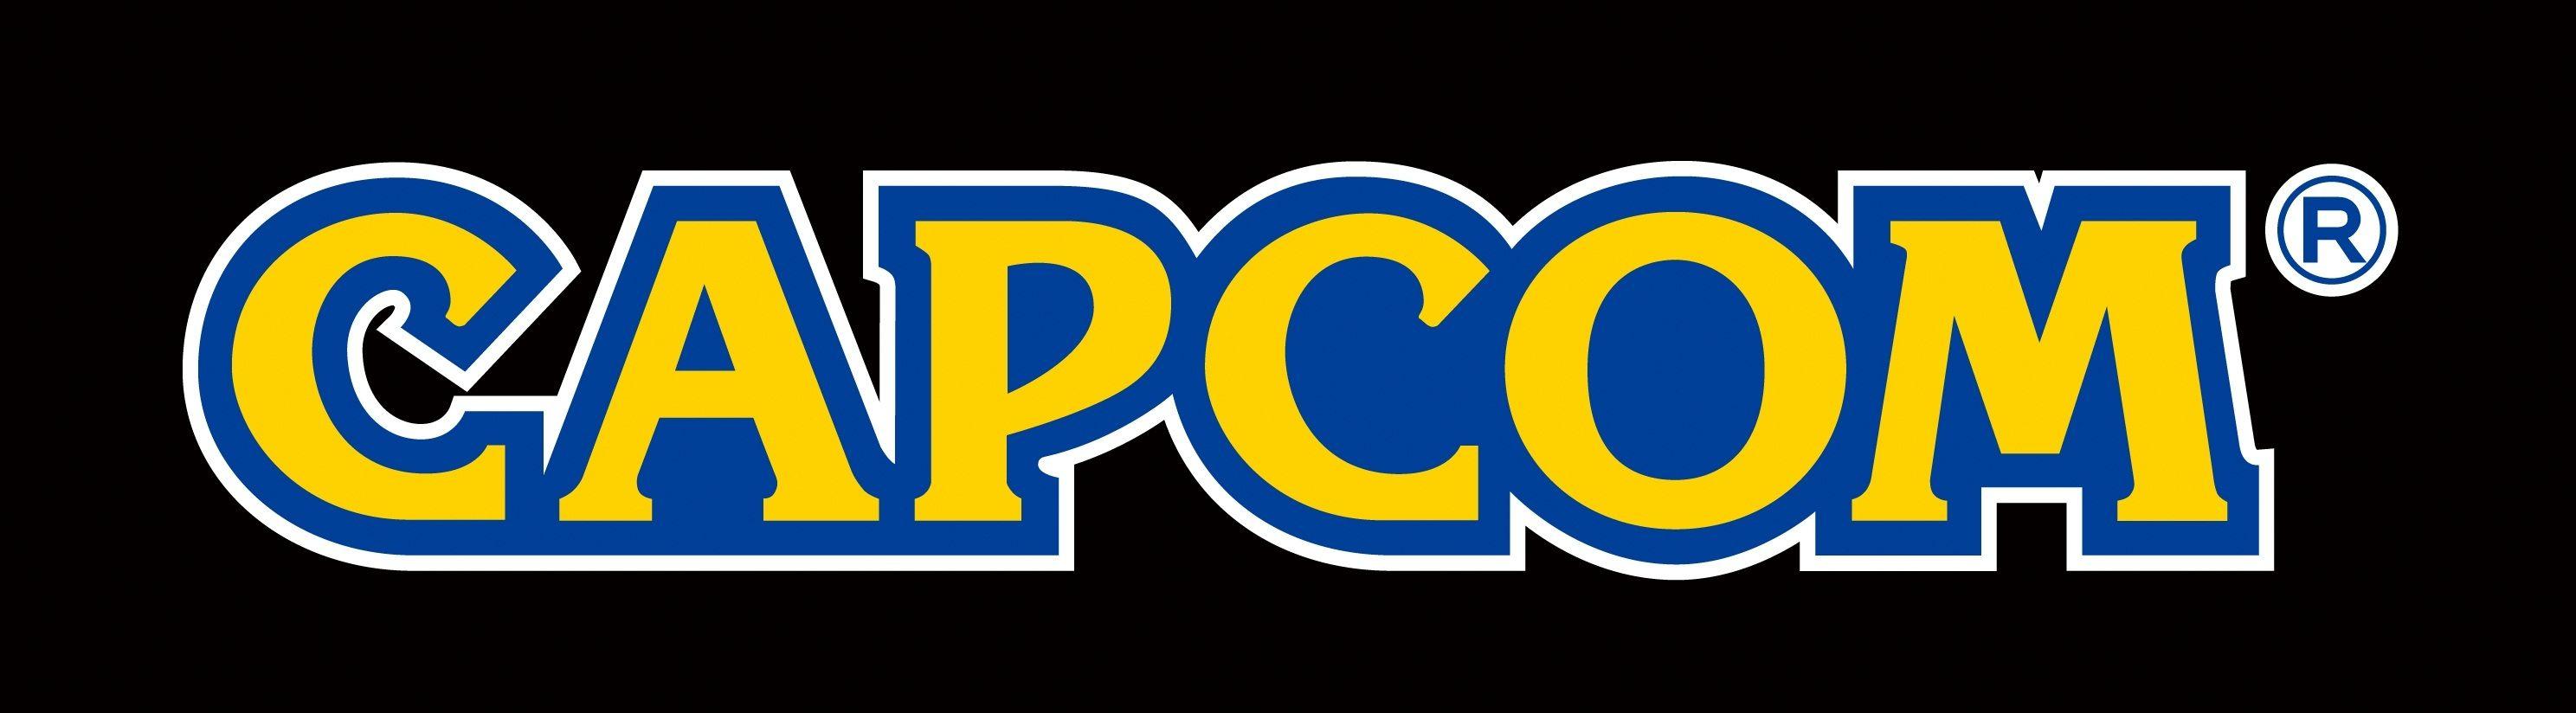 Capcom Logo Wallpapers